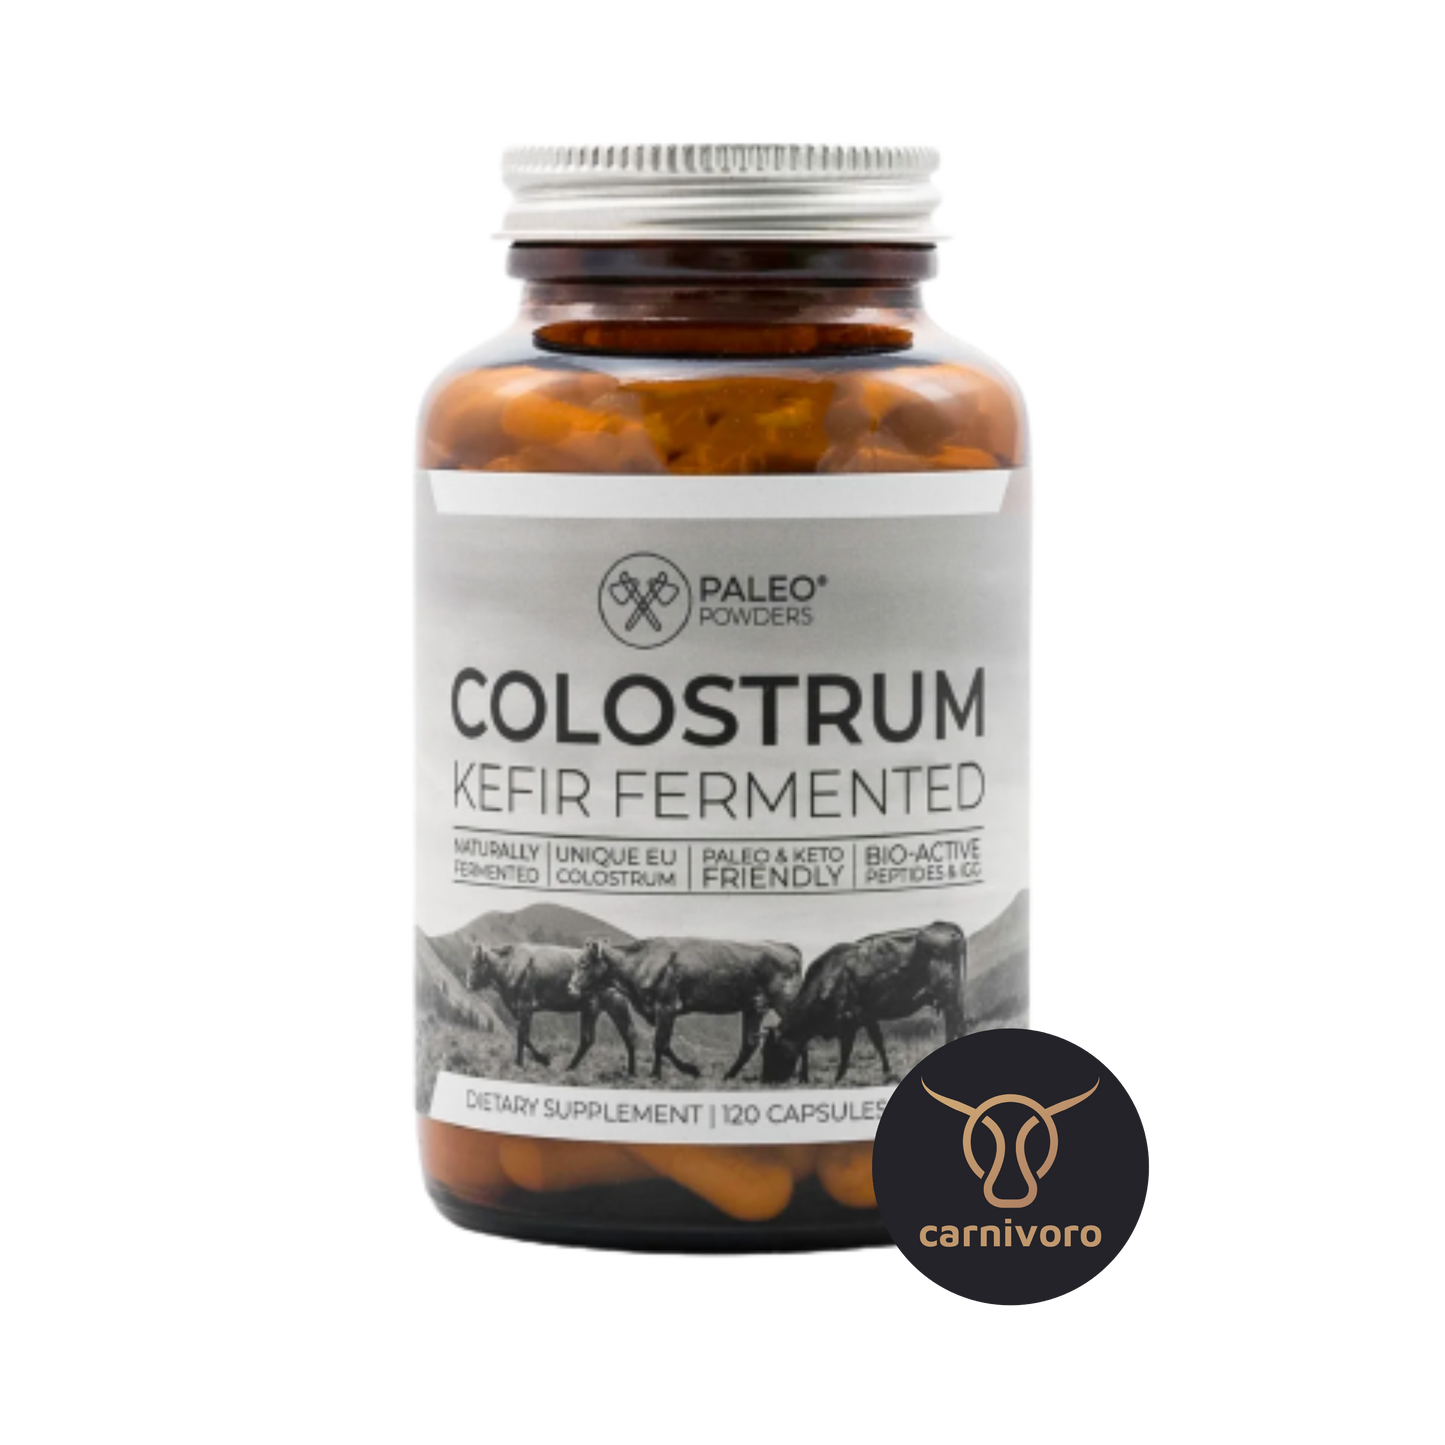 Paleo Powders » Colostrum » Fermented Kefir 120 Capsules